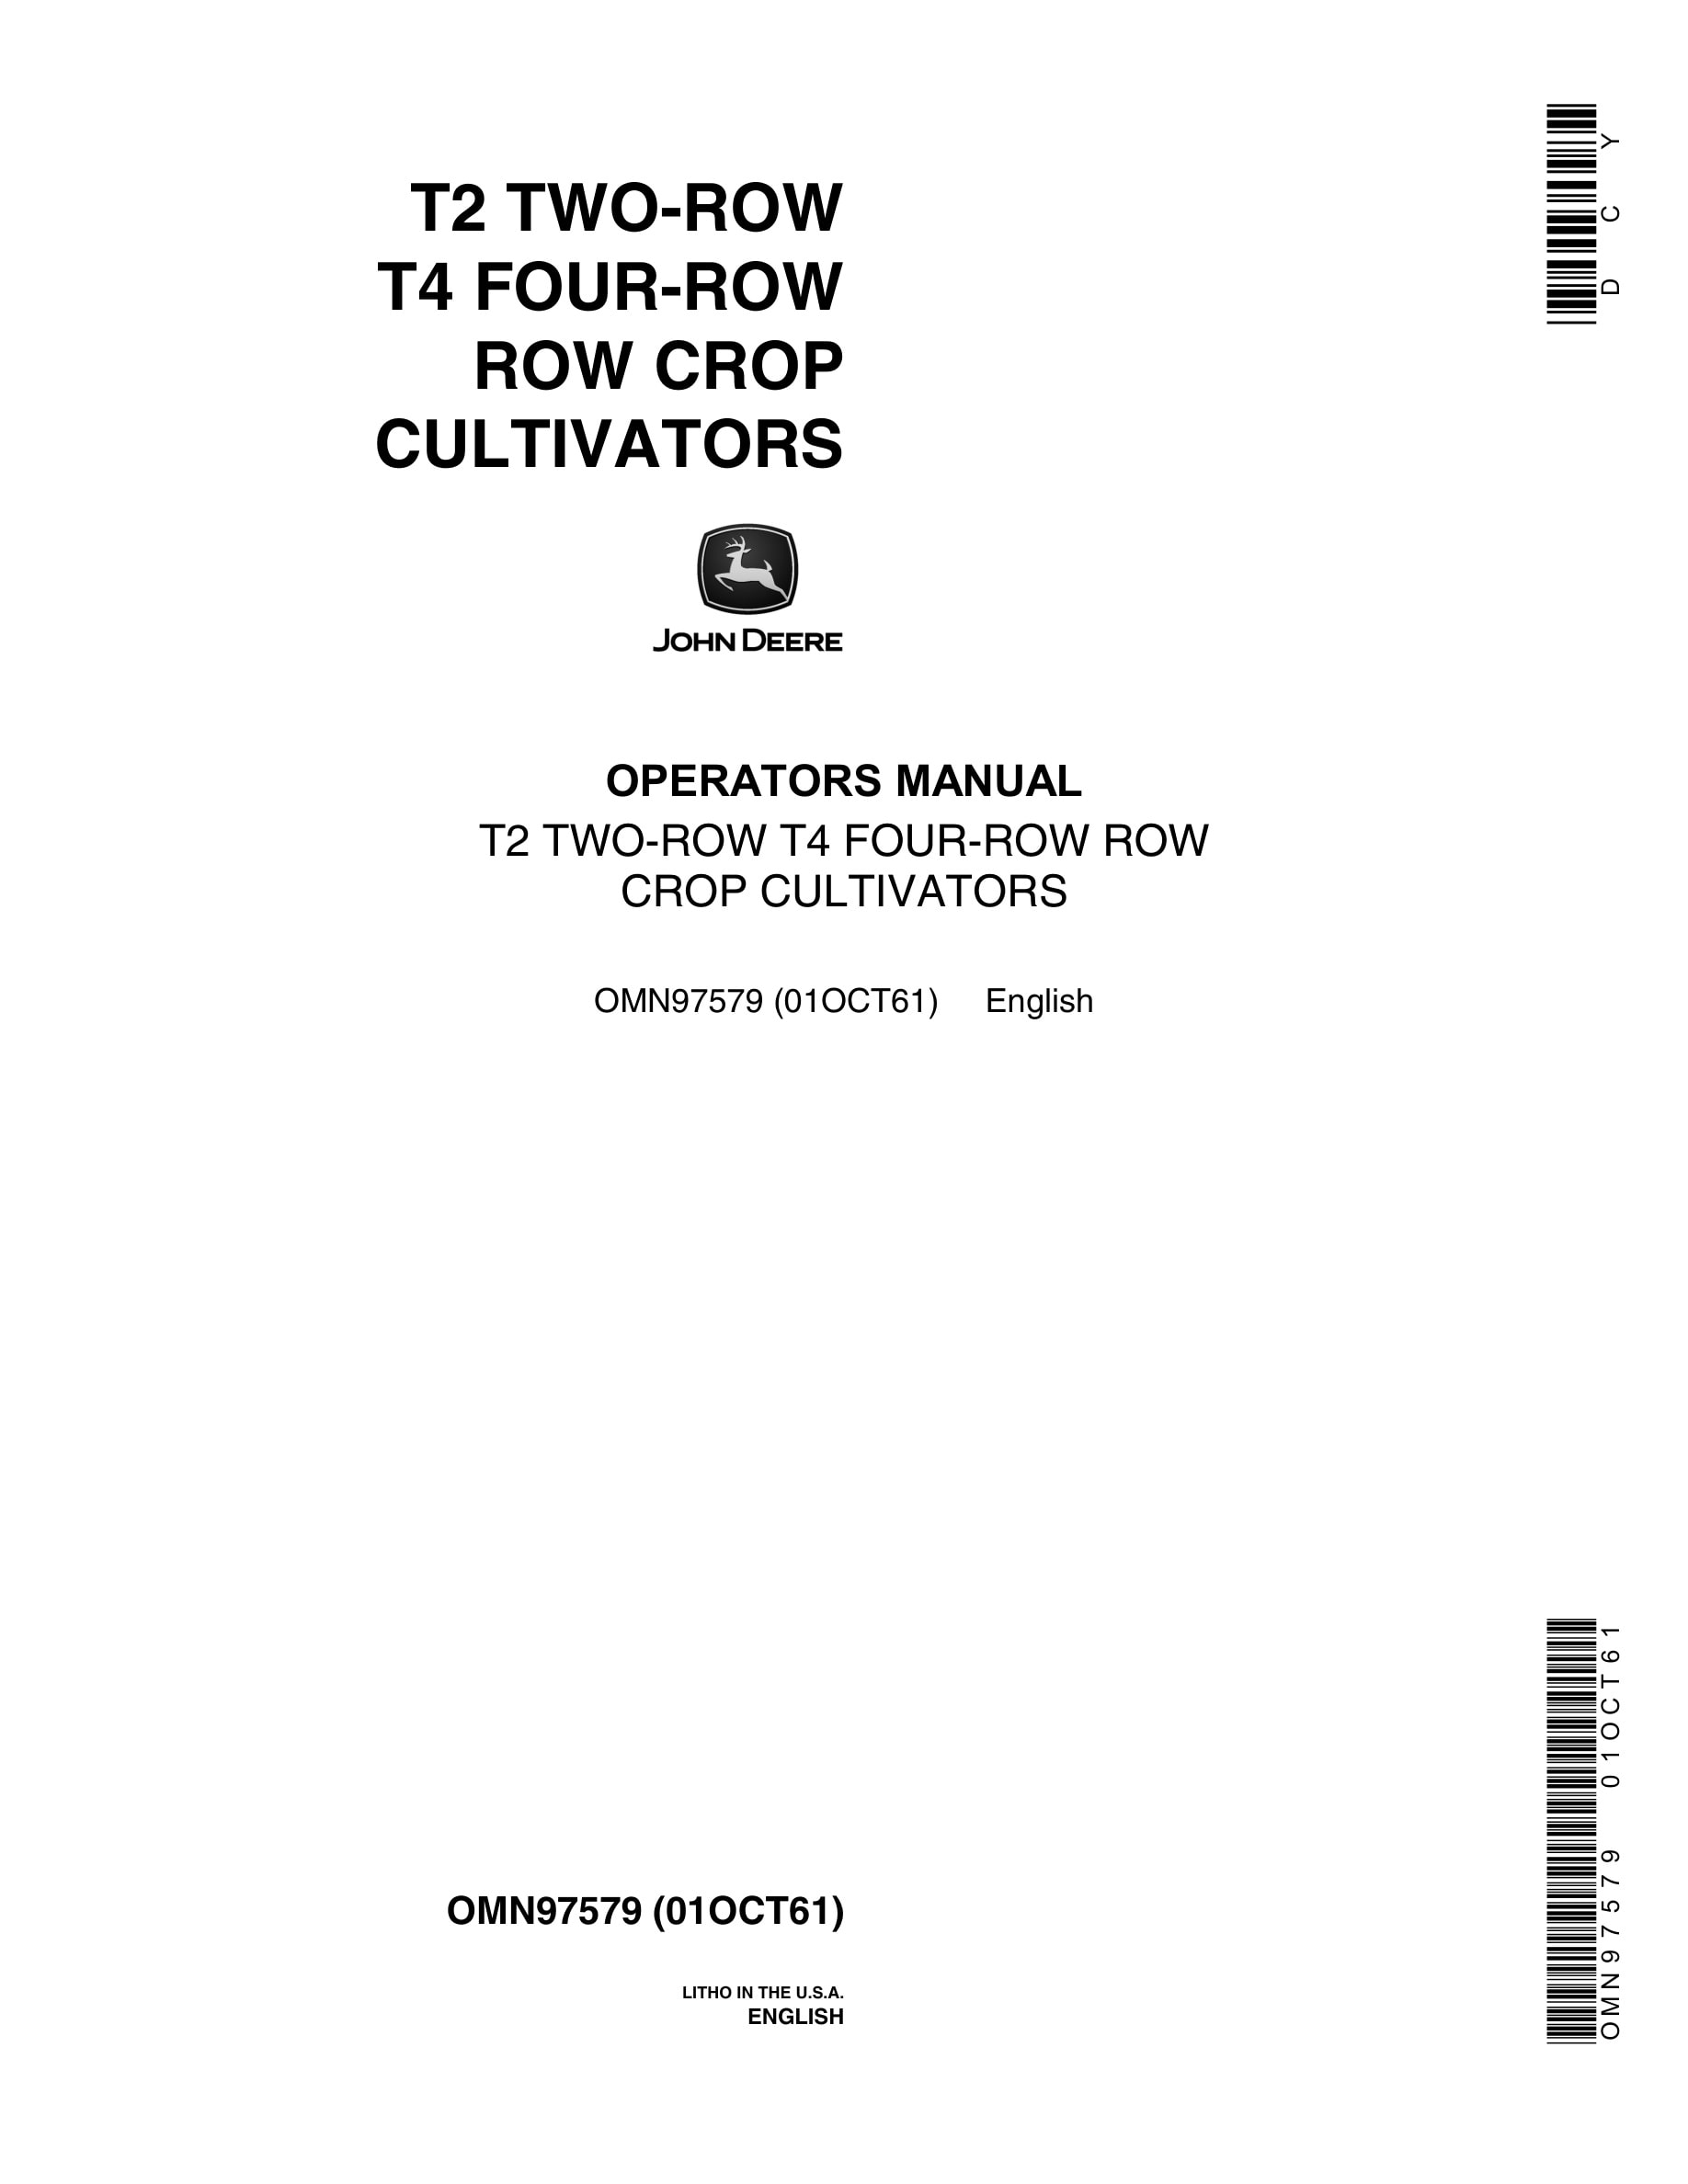 John Deere T2 TWO-ROW T4 FOUR-ROW ROW CROP CULTIVATOR Operator Manual OMN97579-1